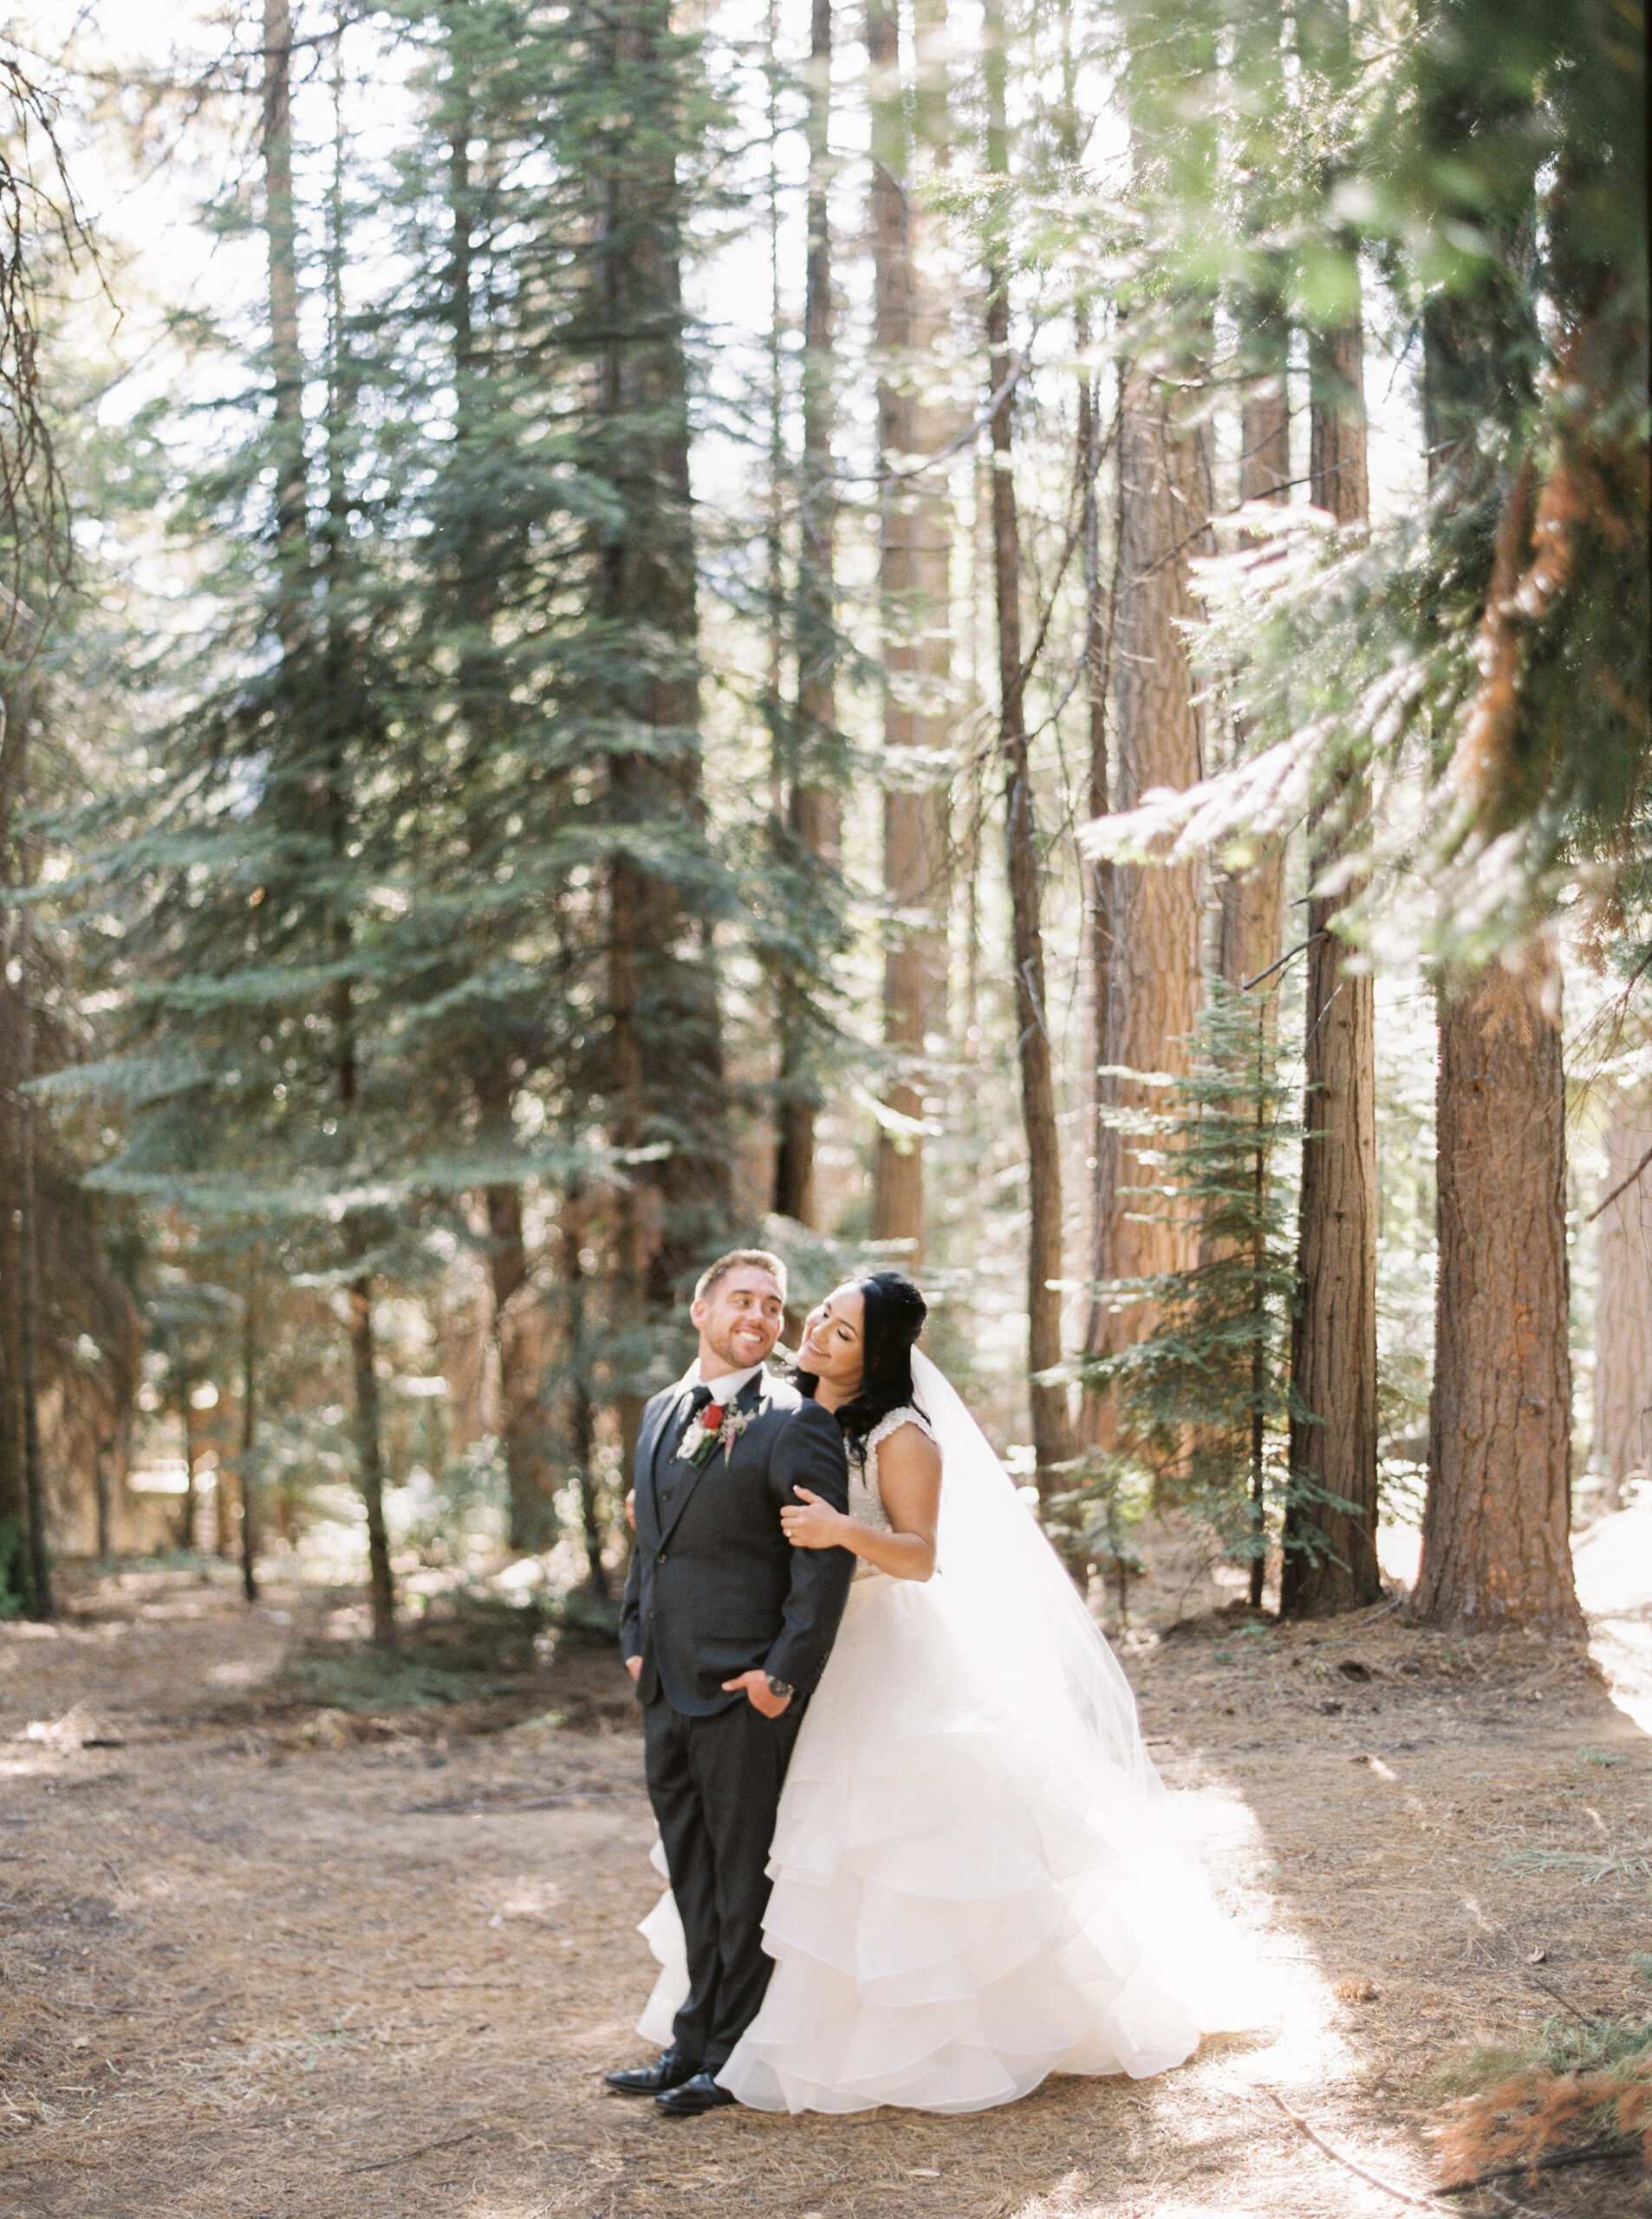 Tenaya-lodge-wedding-at-yosemite-national-park-california-39.jpg